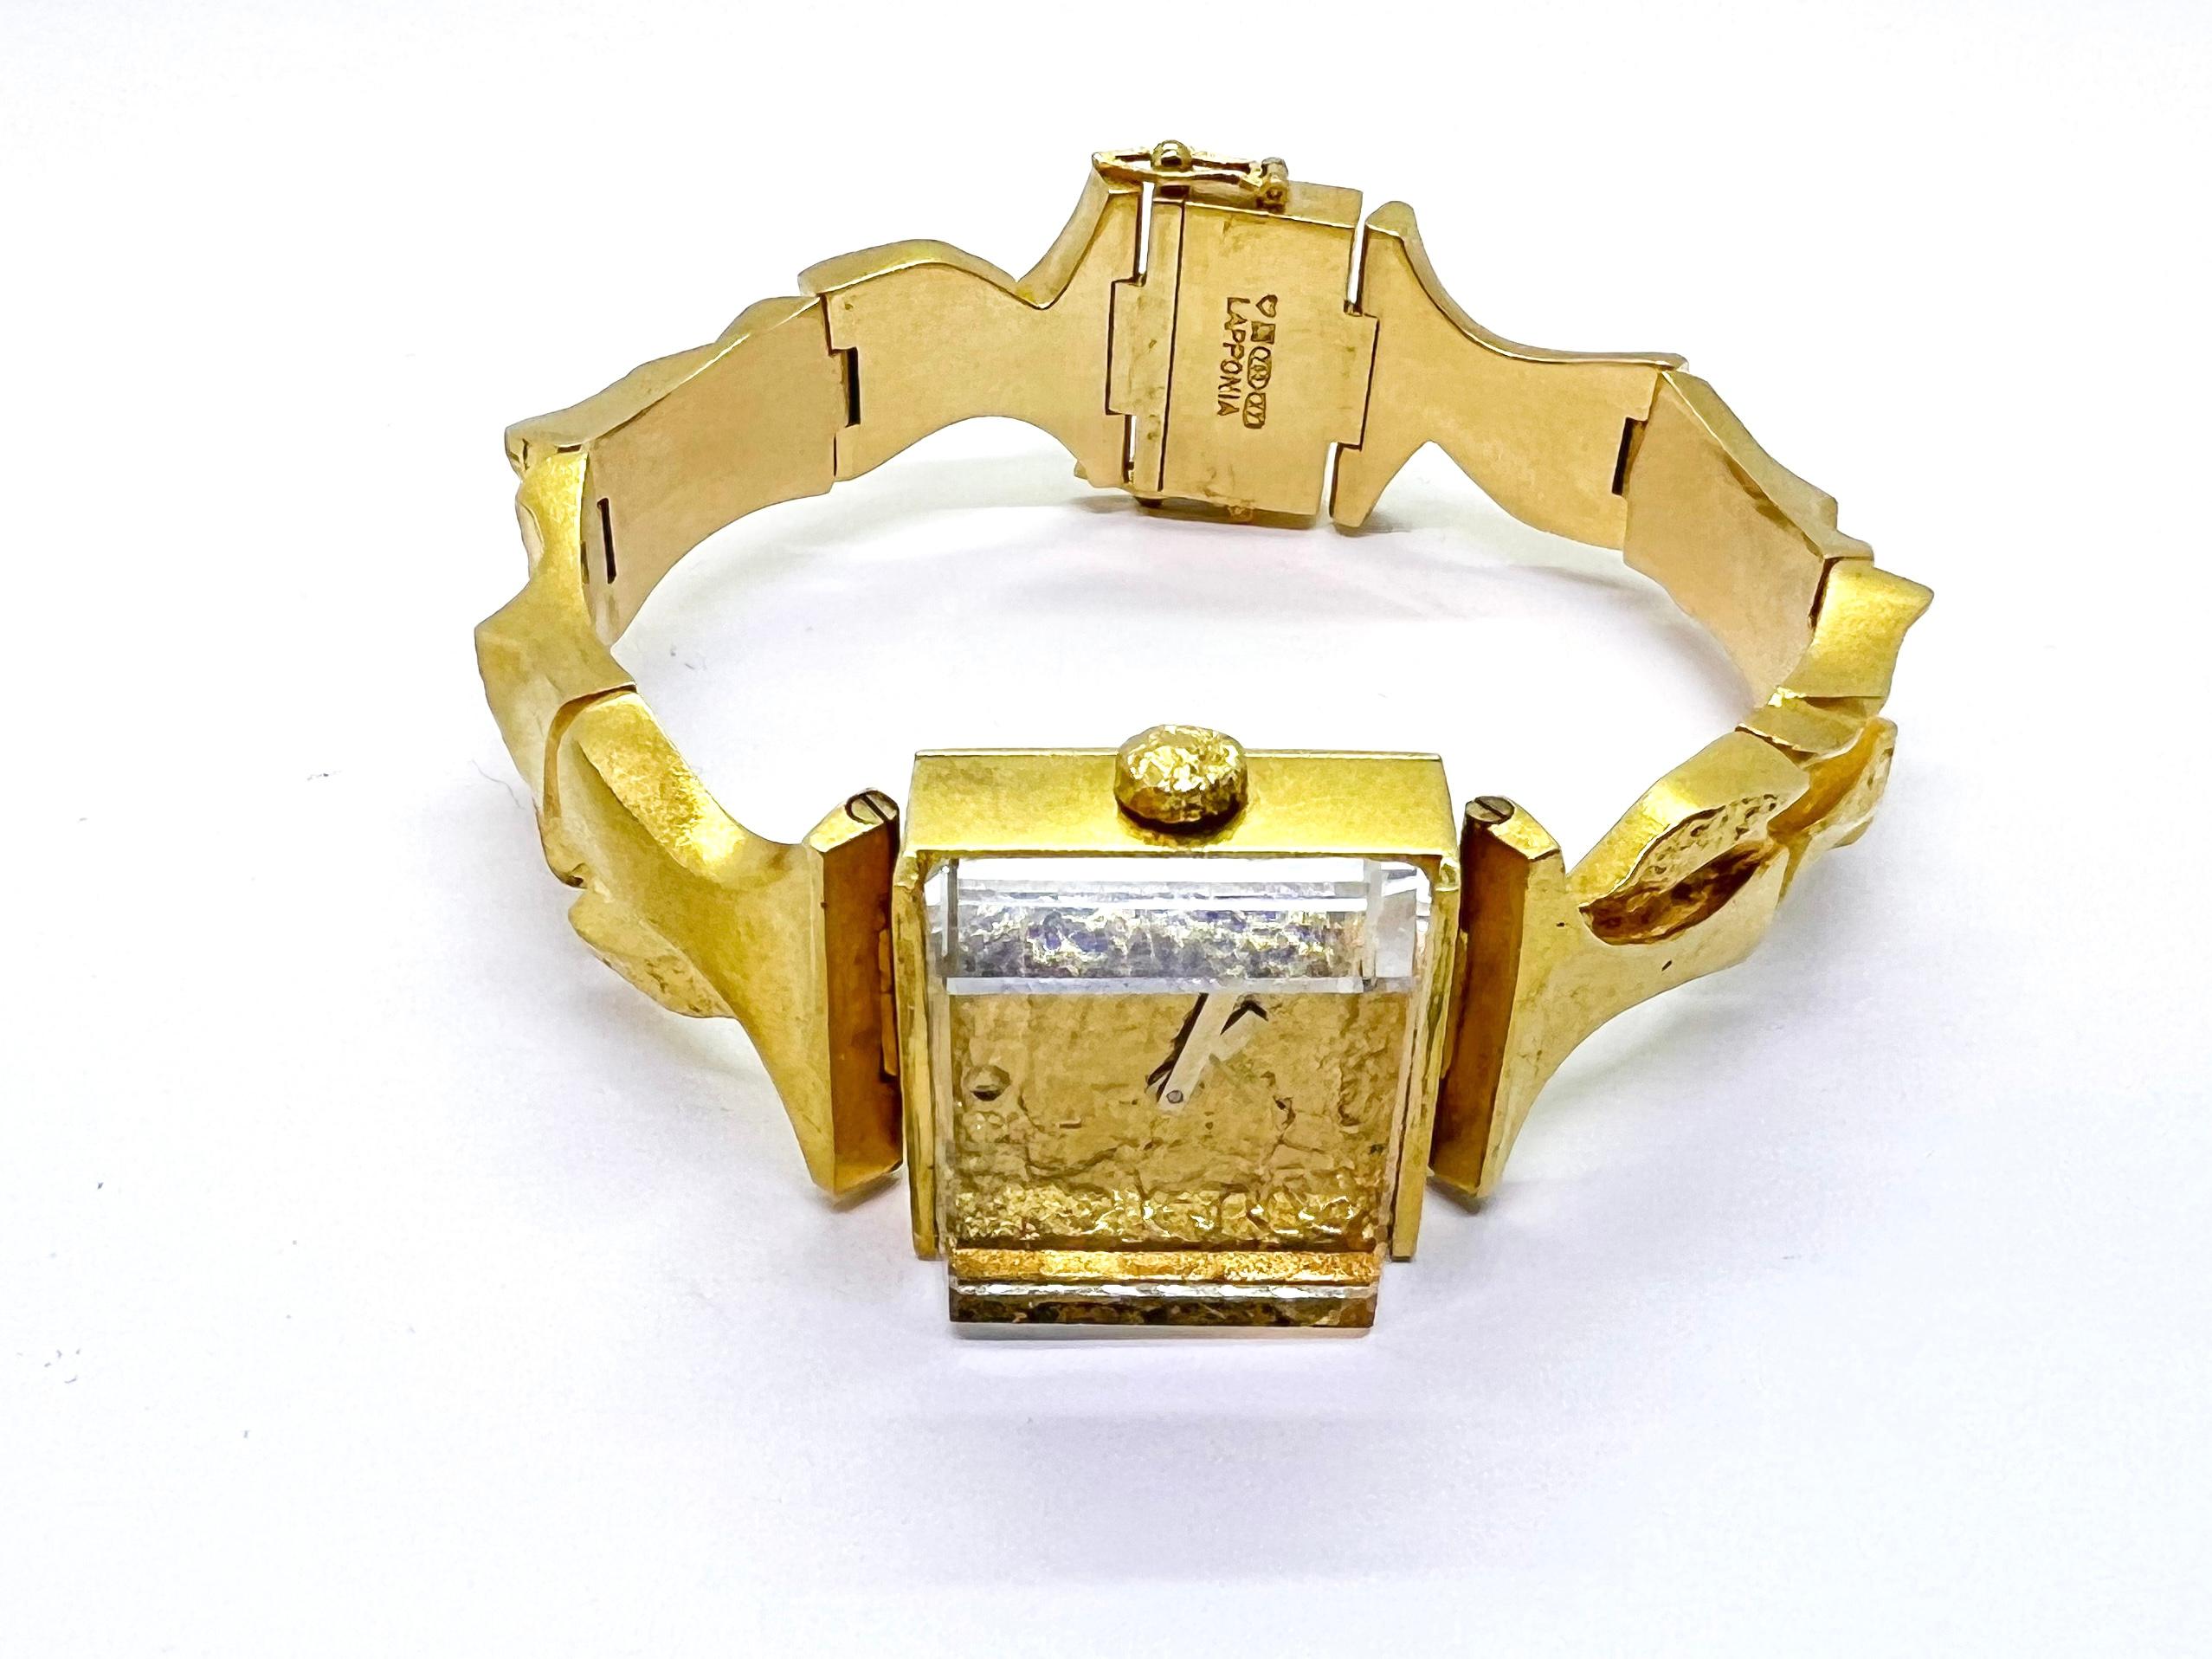 Björn Weckströn Lapponia Wristwatch 18 Karat Gold Super Rare Time Adviser, =Tiedonantaja

Size
17,5cm. 69,3g
Gold watch designed by Björn Weckström for Lapponia. Signed LAPPONIA
rare and heavy wristwatch from Lapponia, case and bracelet in solid